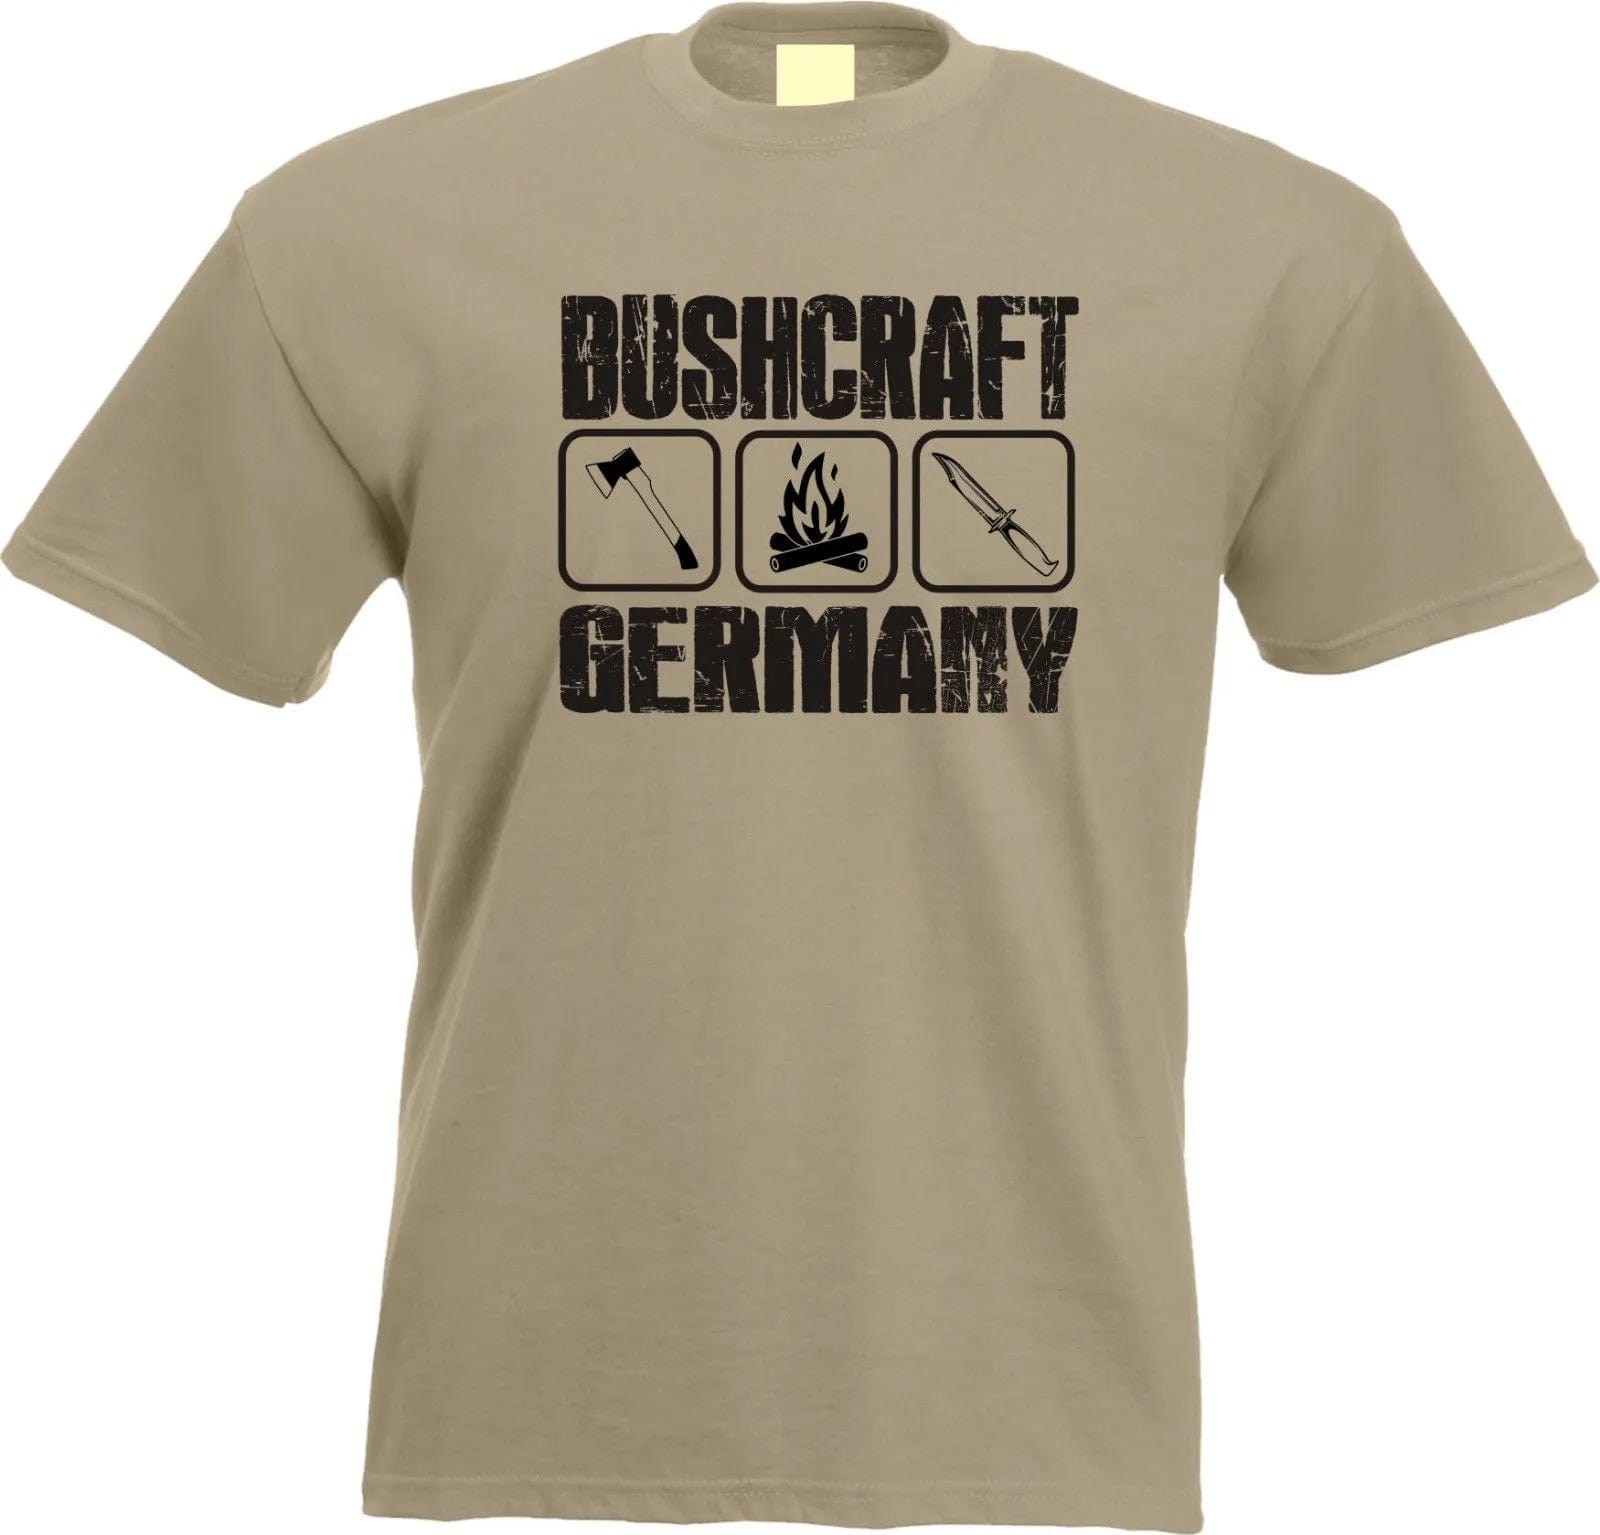 T-Shirt "Bushcraft Germany" / Outdoorkleidung 1 / S prepper-store.com